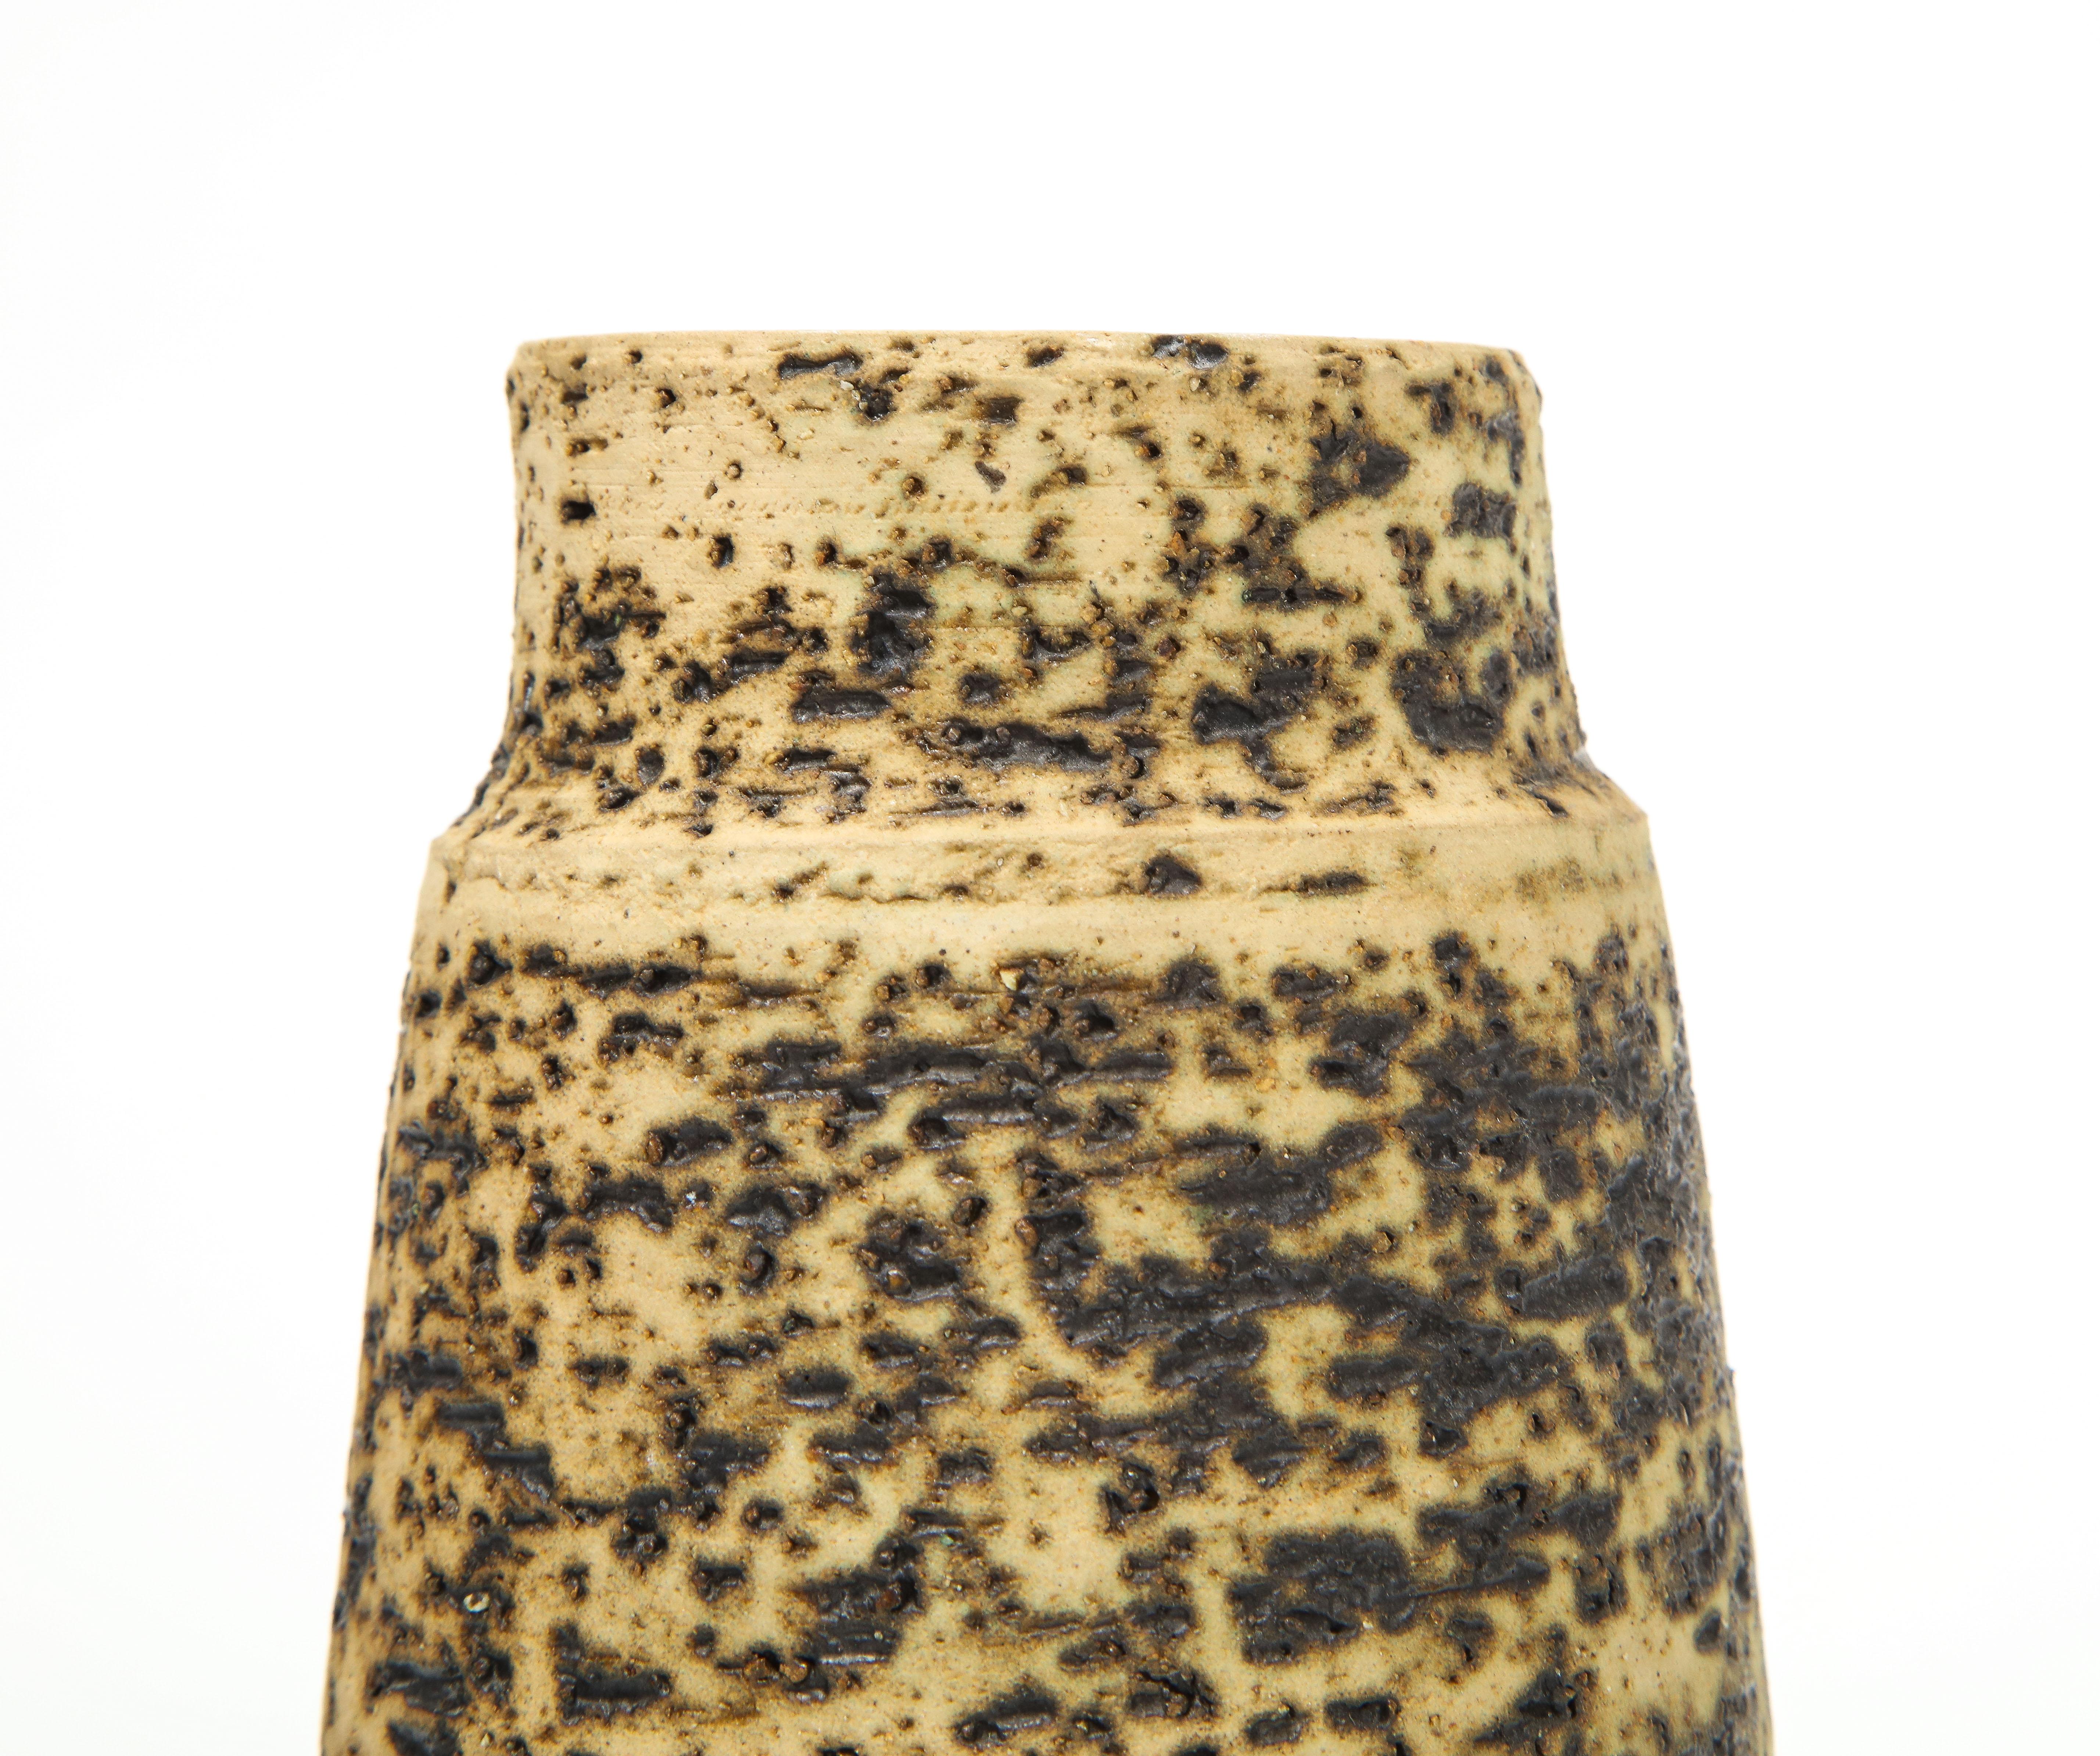 Pieter Groeneveld speckled ceramic vase, Holland, circa 1960s.